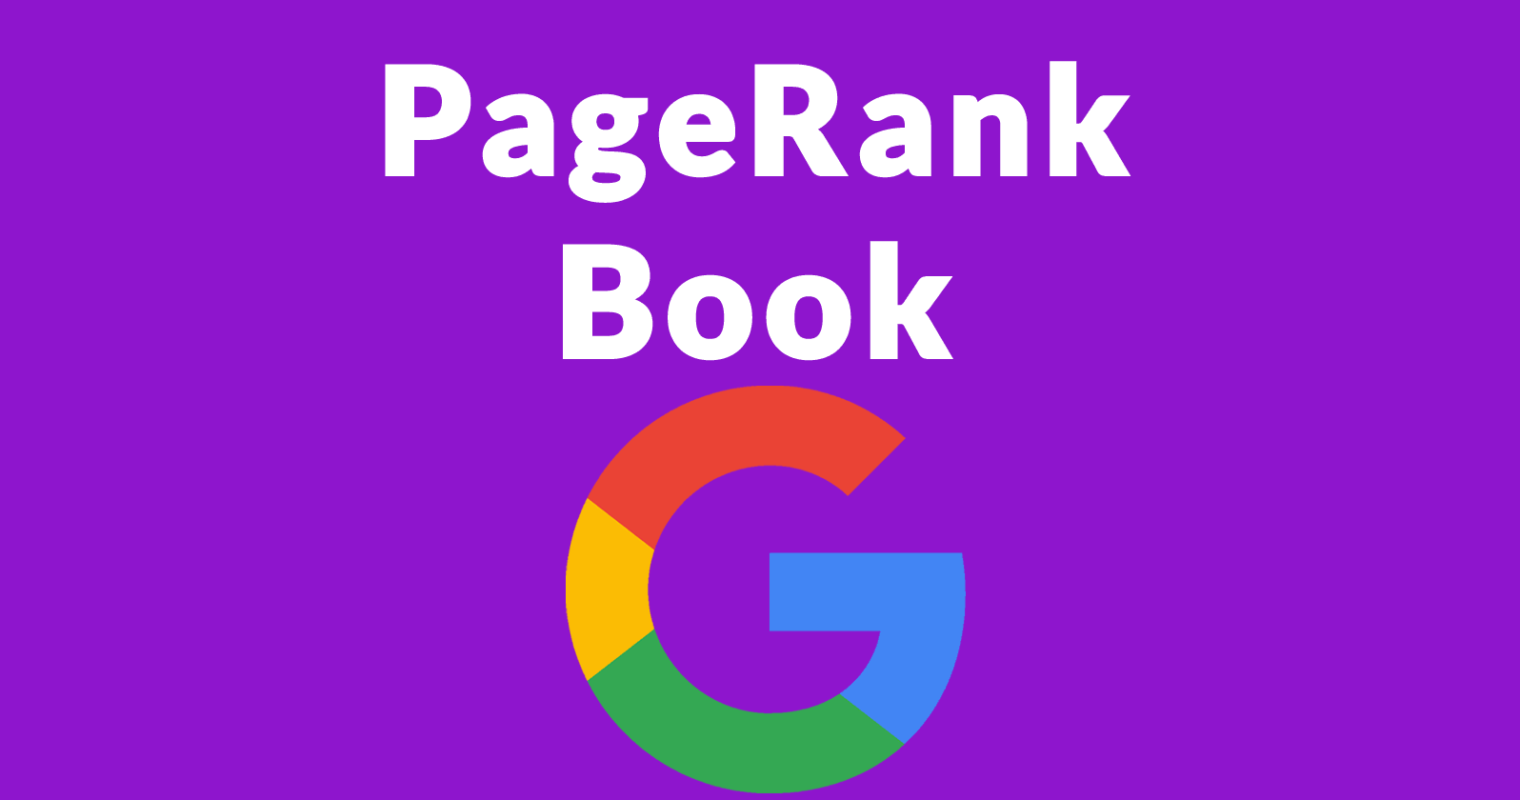 pagerank-book-5ea67f6867e3a-1520x800.png